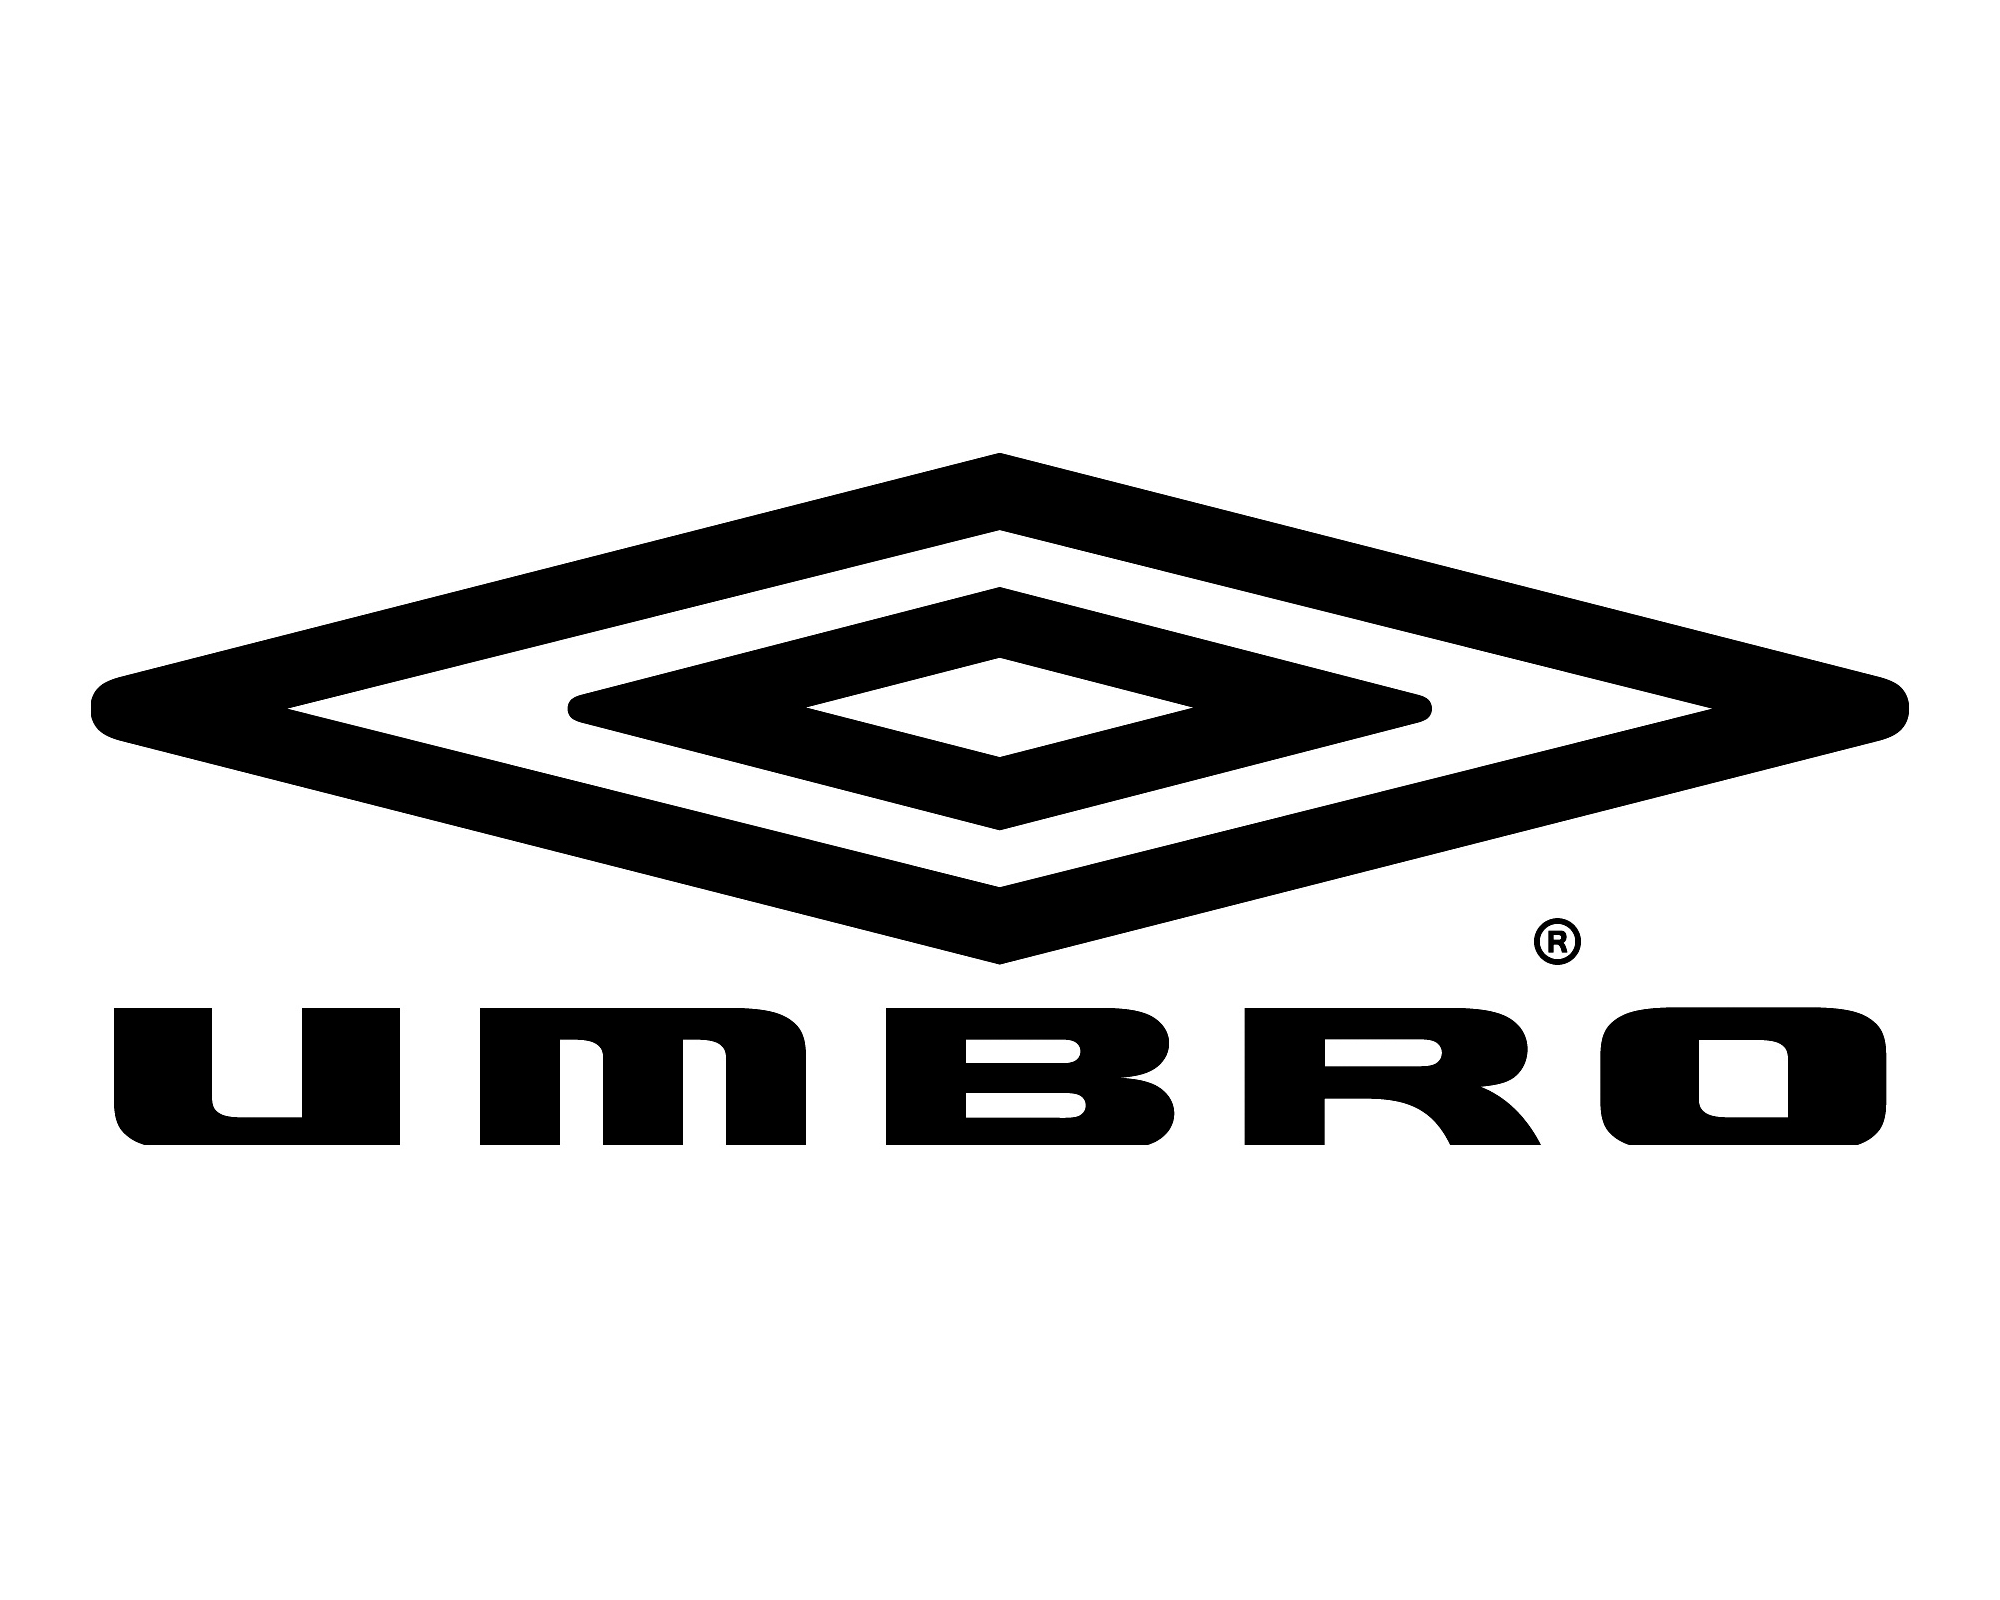 1970s Umbro Logo - Umbro logo